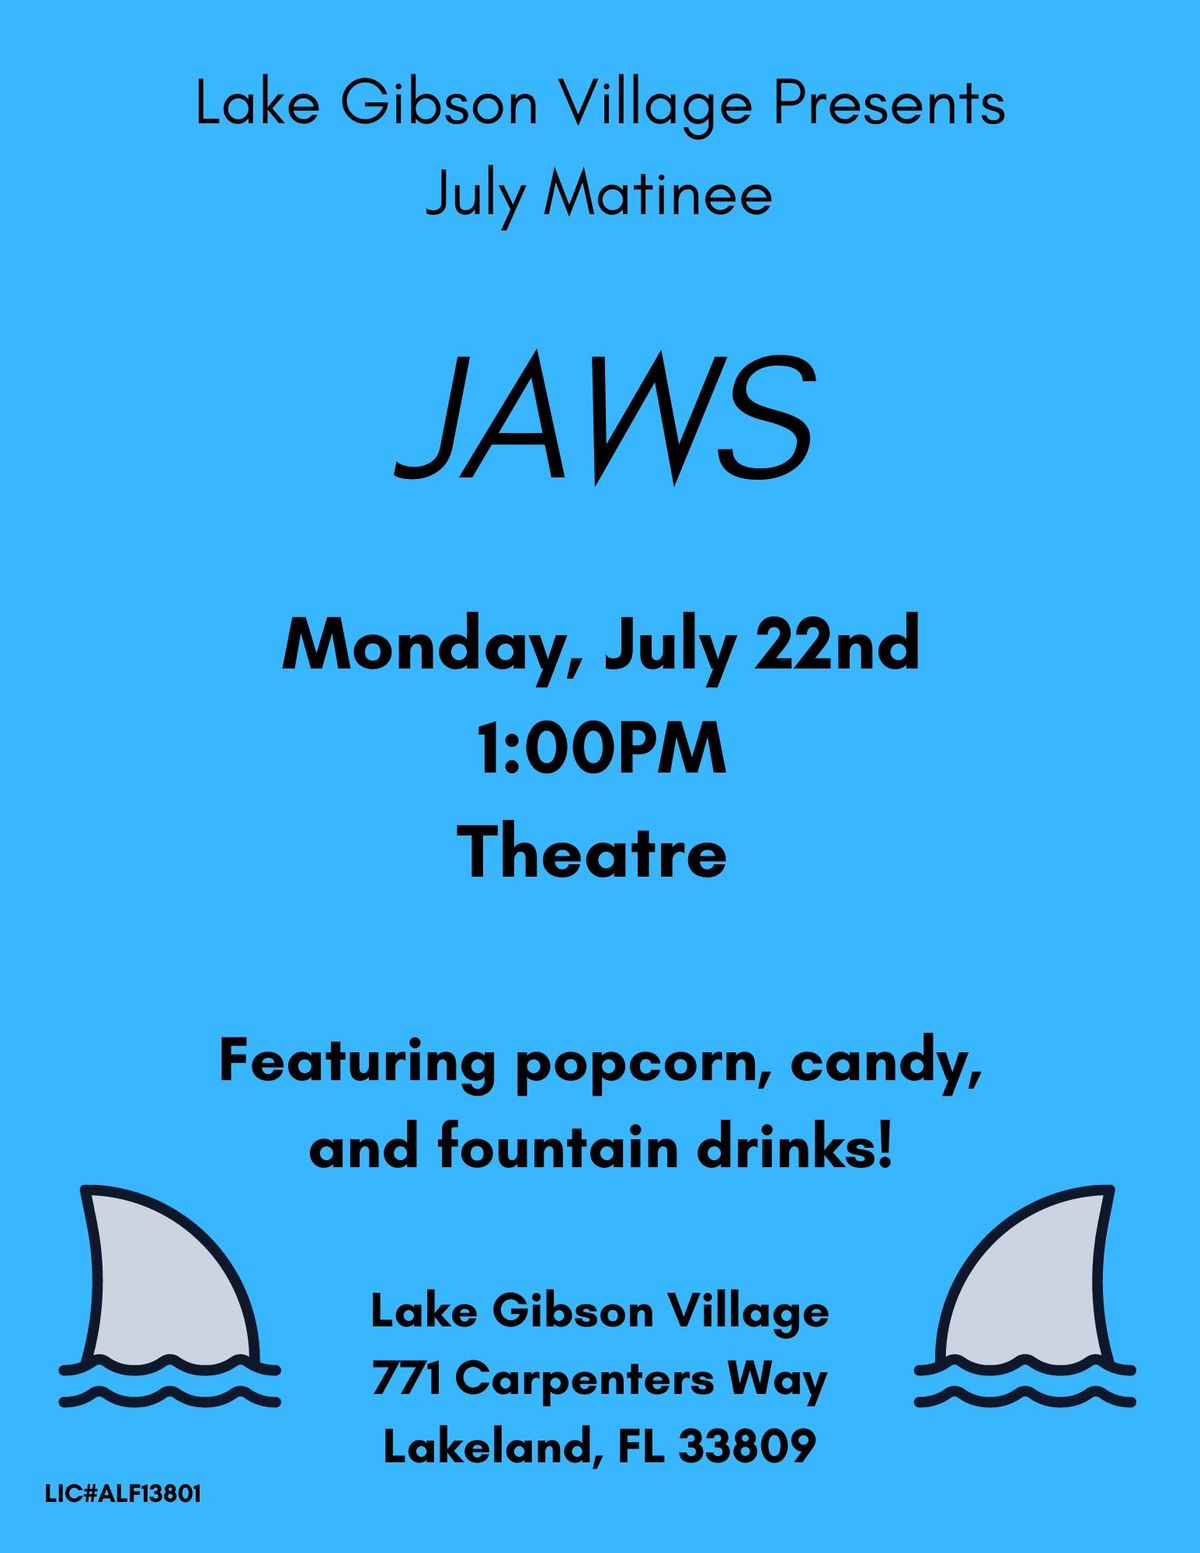 Theatre Matinee: JAWS